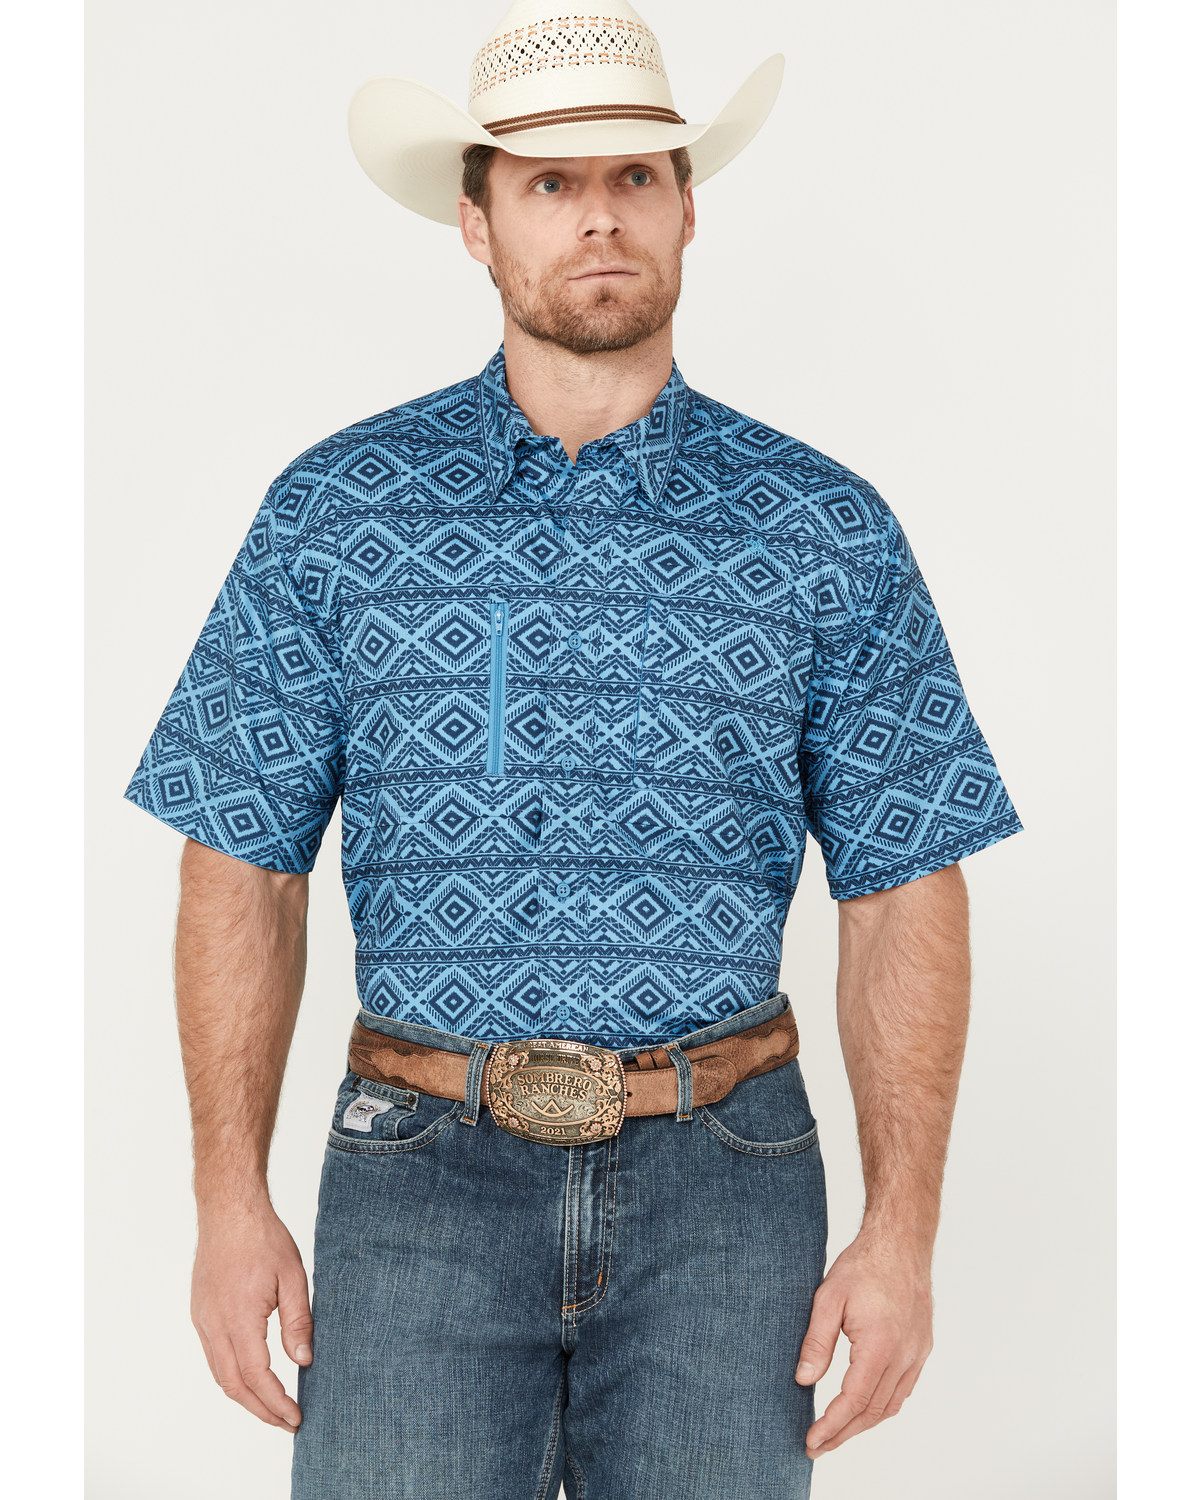 Ariat Men's VentTEK Geo Print Classic Fit Short Sleeve Shirt